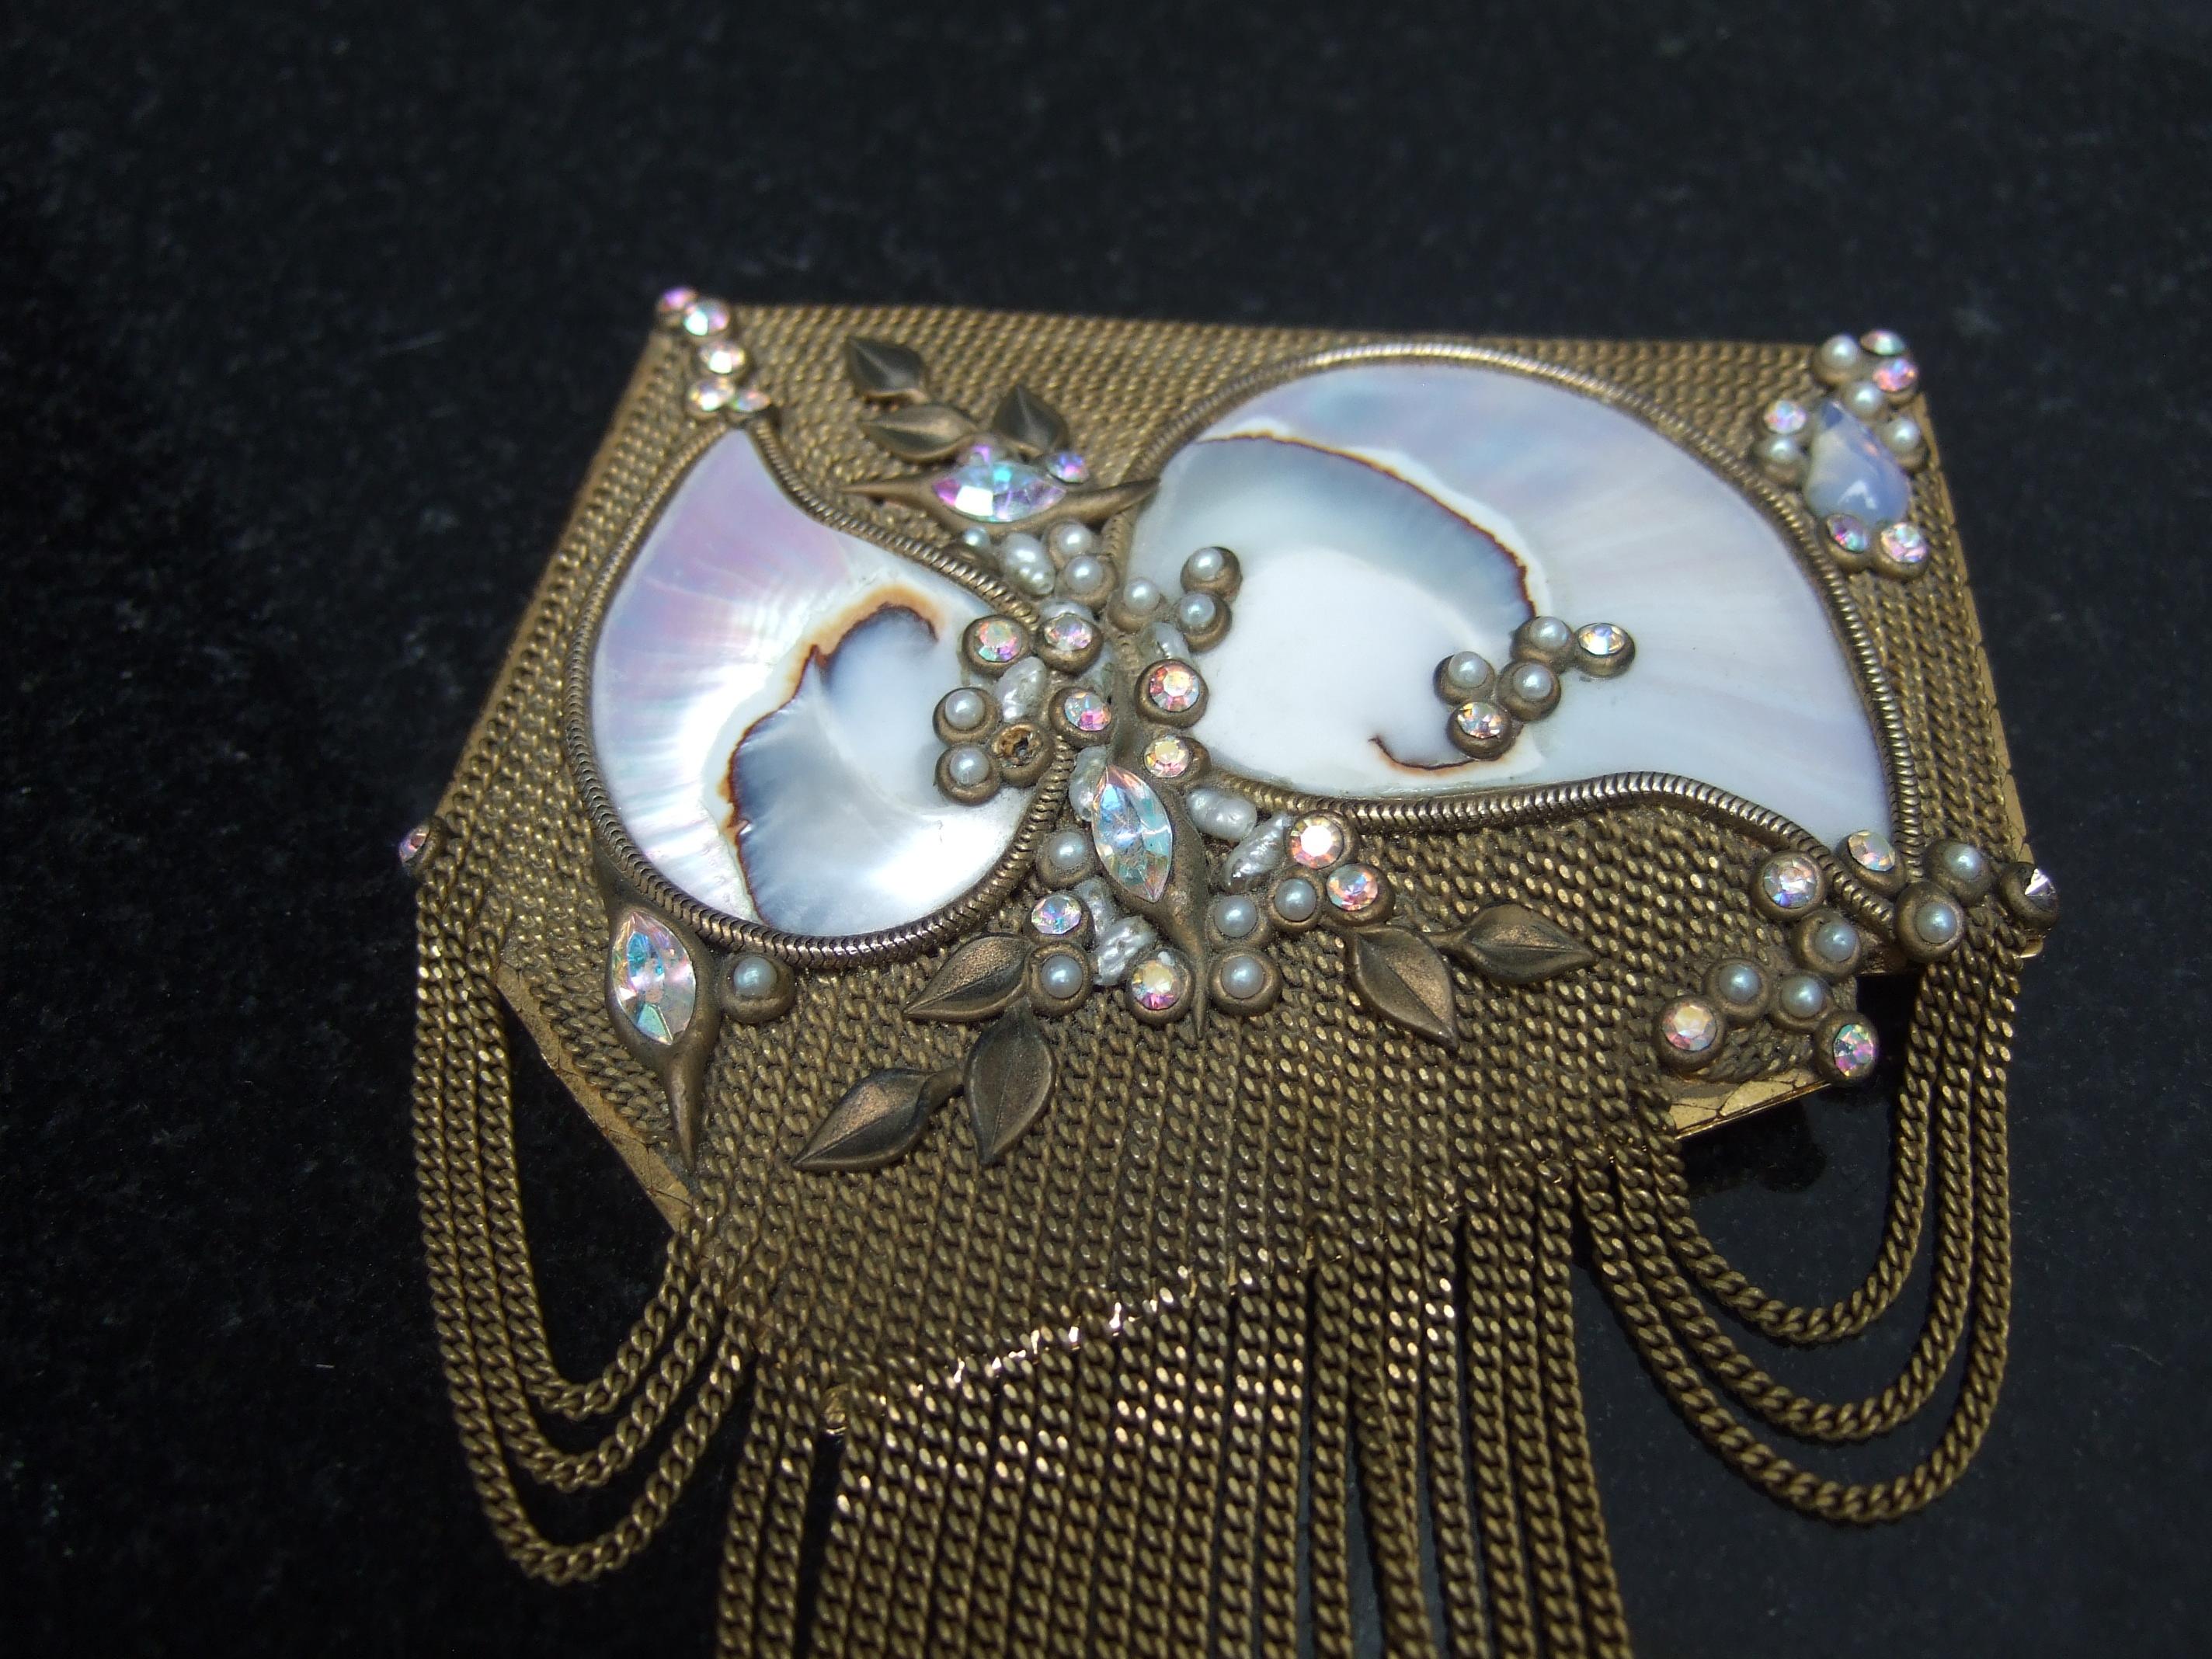  Mother of Pearl Jeweled Artisan Massive Gilt Metal Tassel Brooch c 1970s For Sale 7